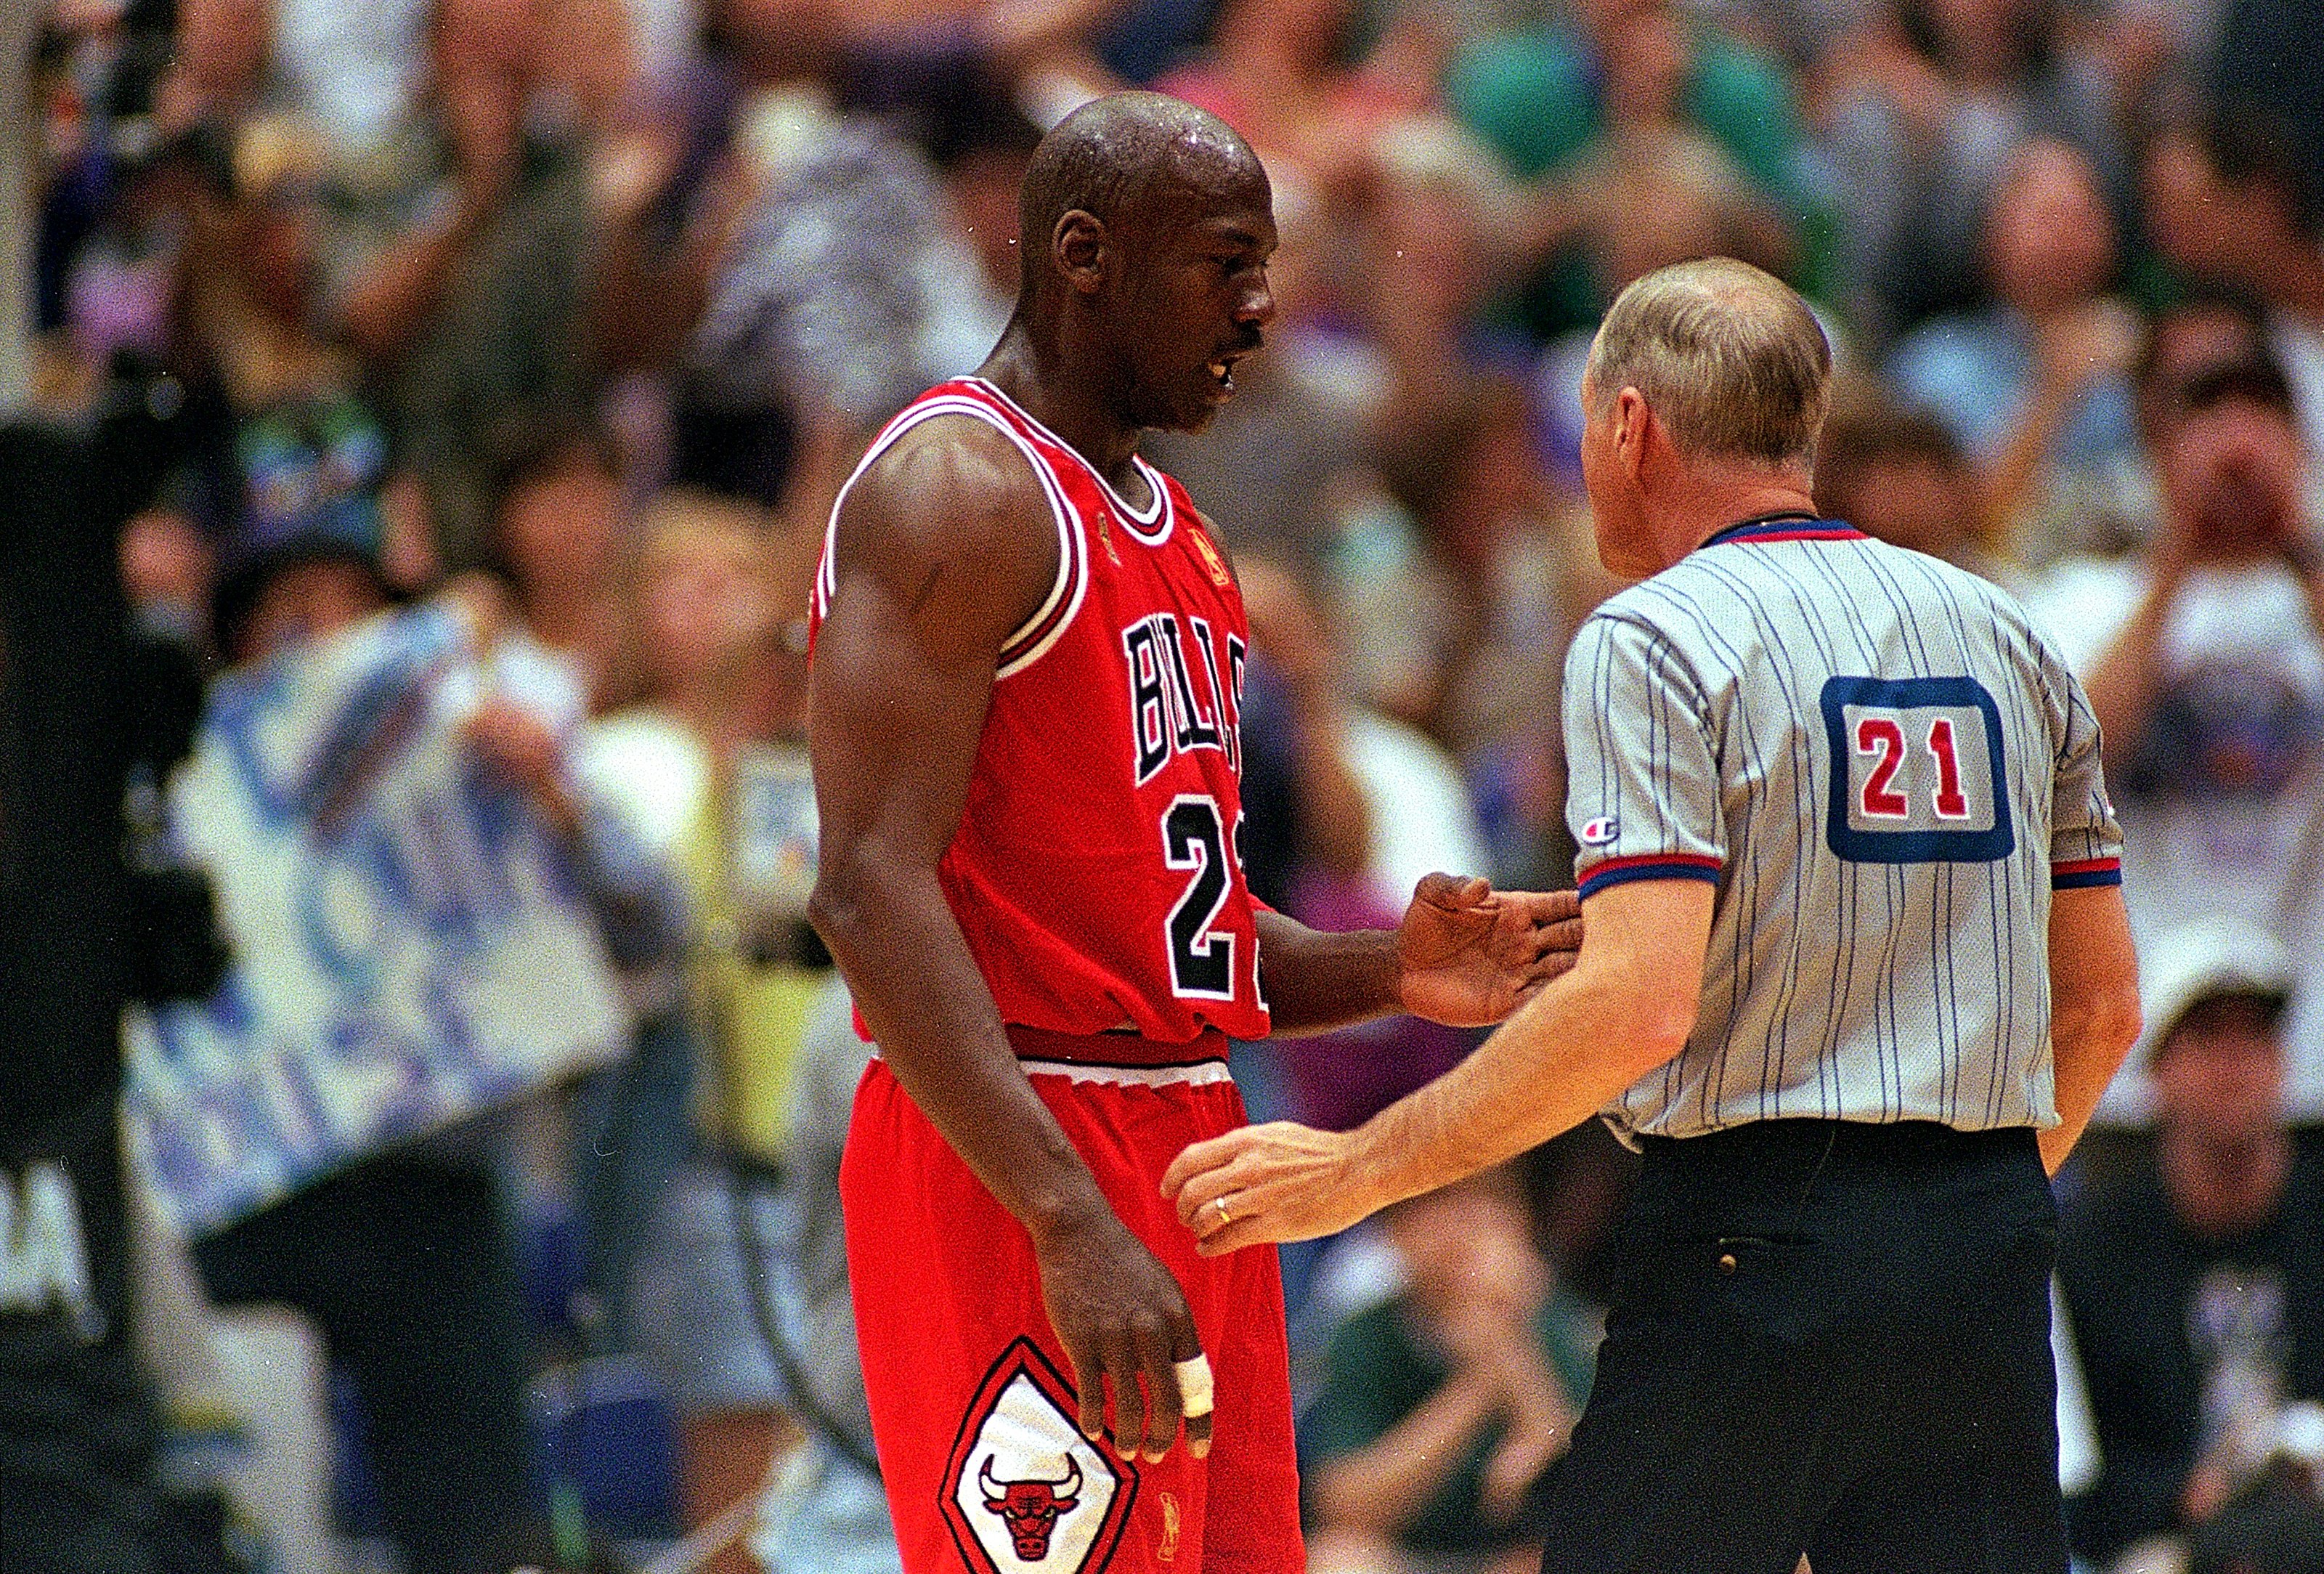 Michael Jordan talks to a referee during the 1997 NBA Finals